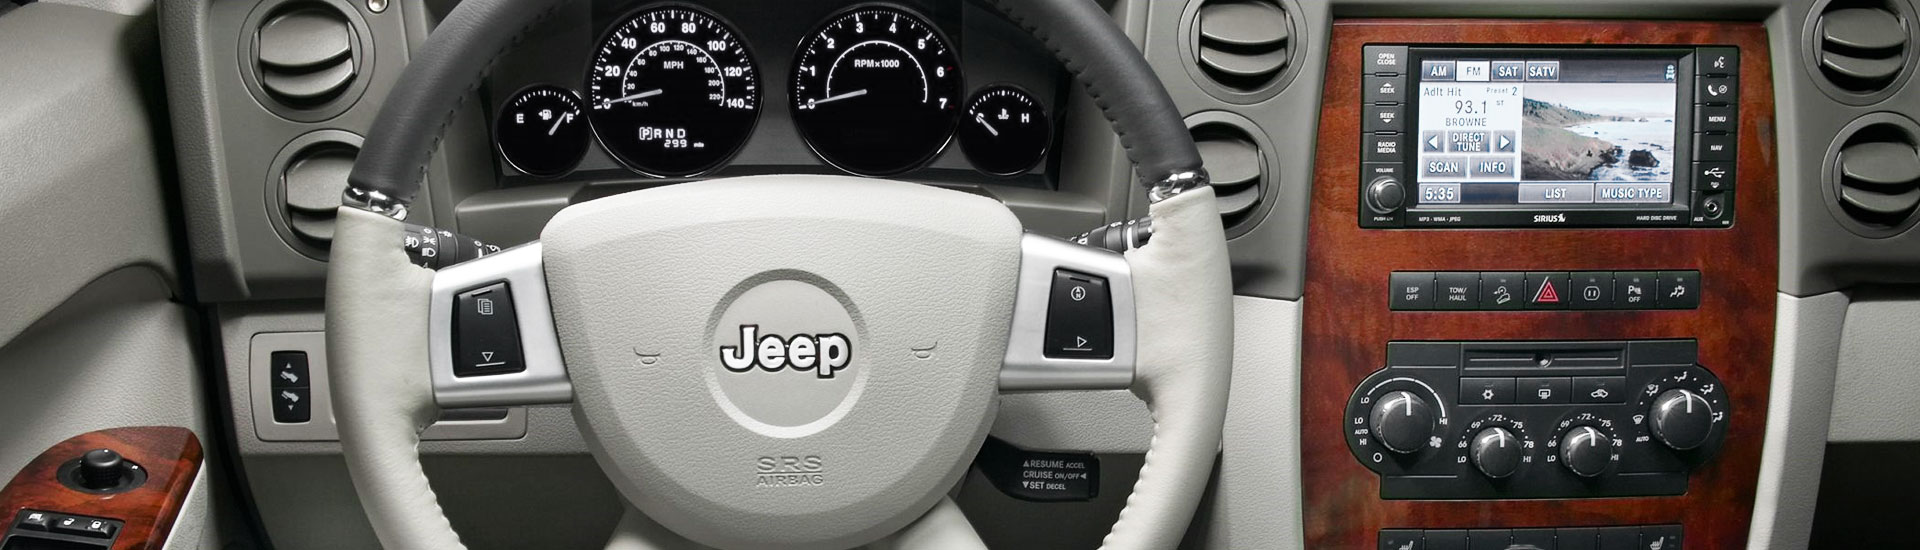 Jeep Commander Custom Dash Kits